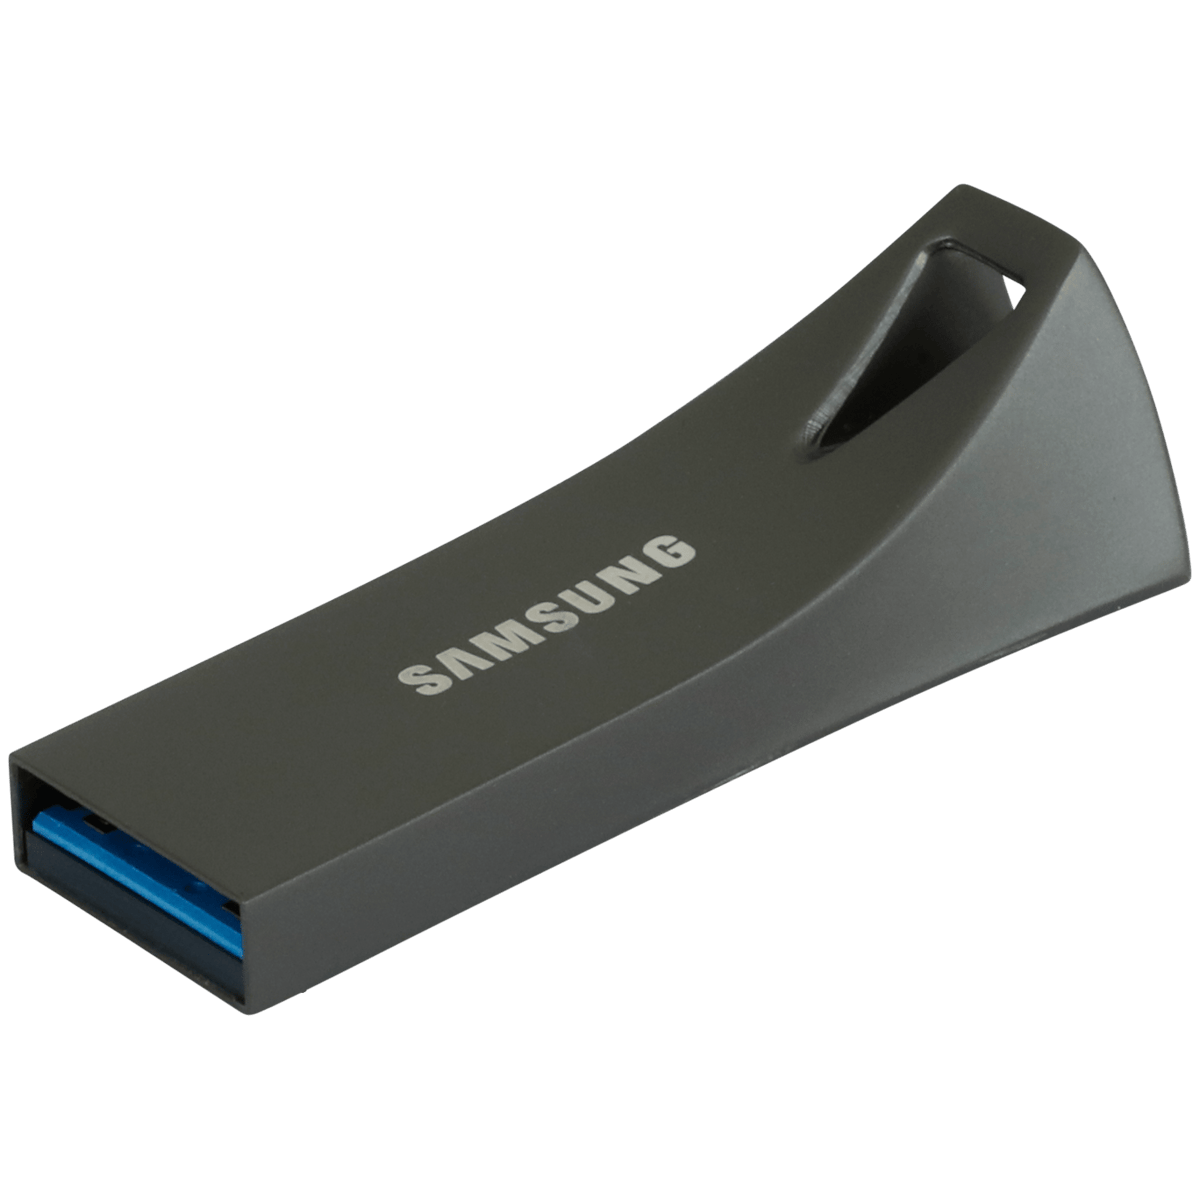 Memoria USB 3.1 Samsung